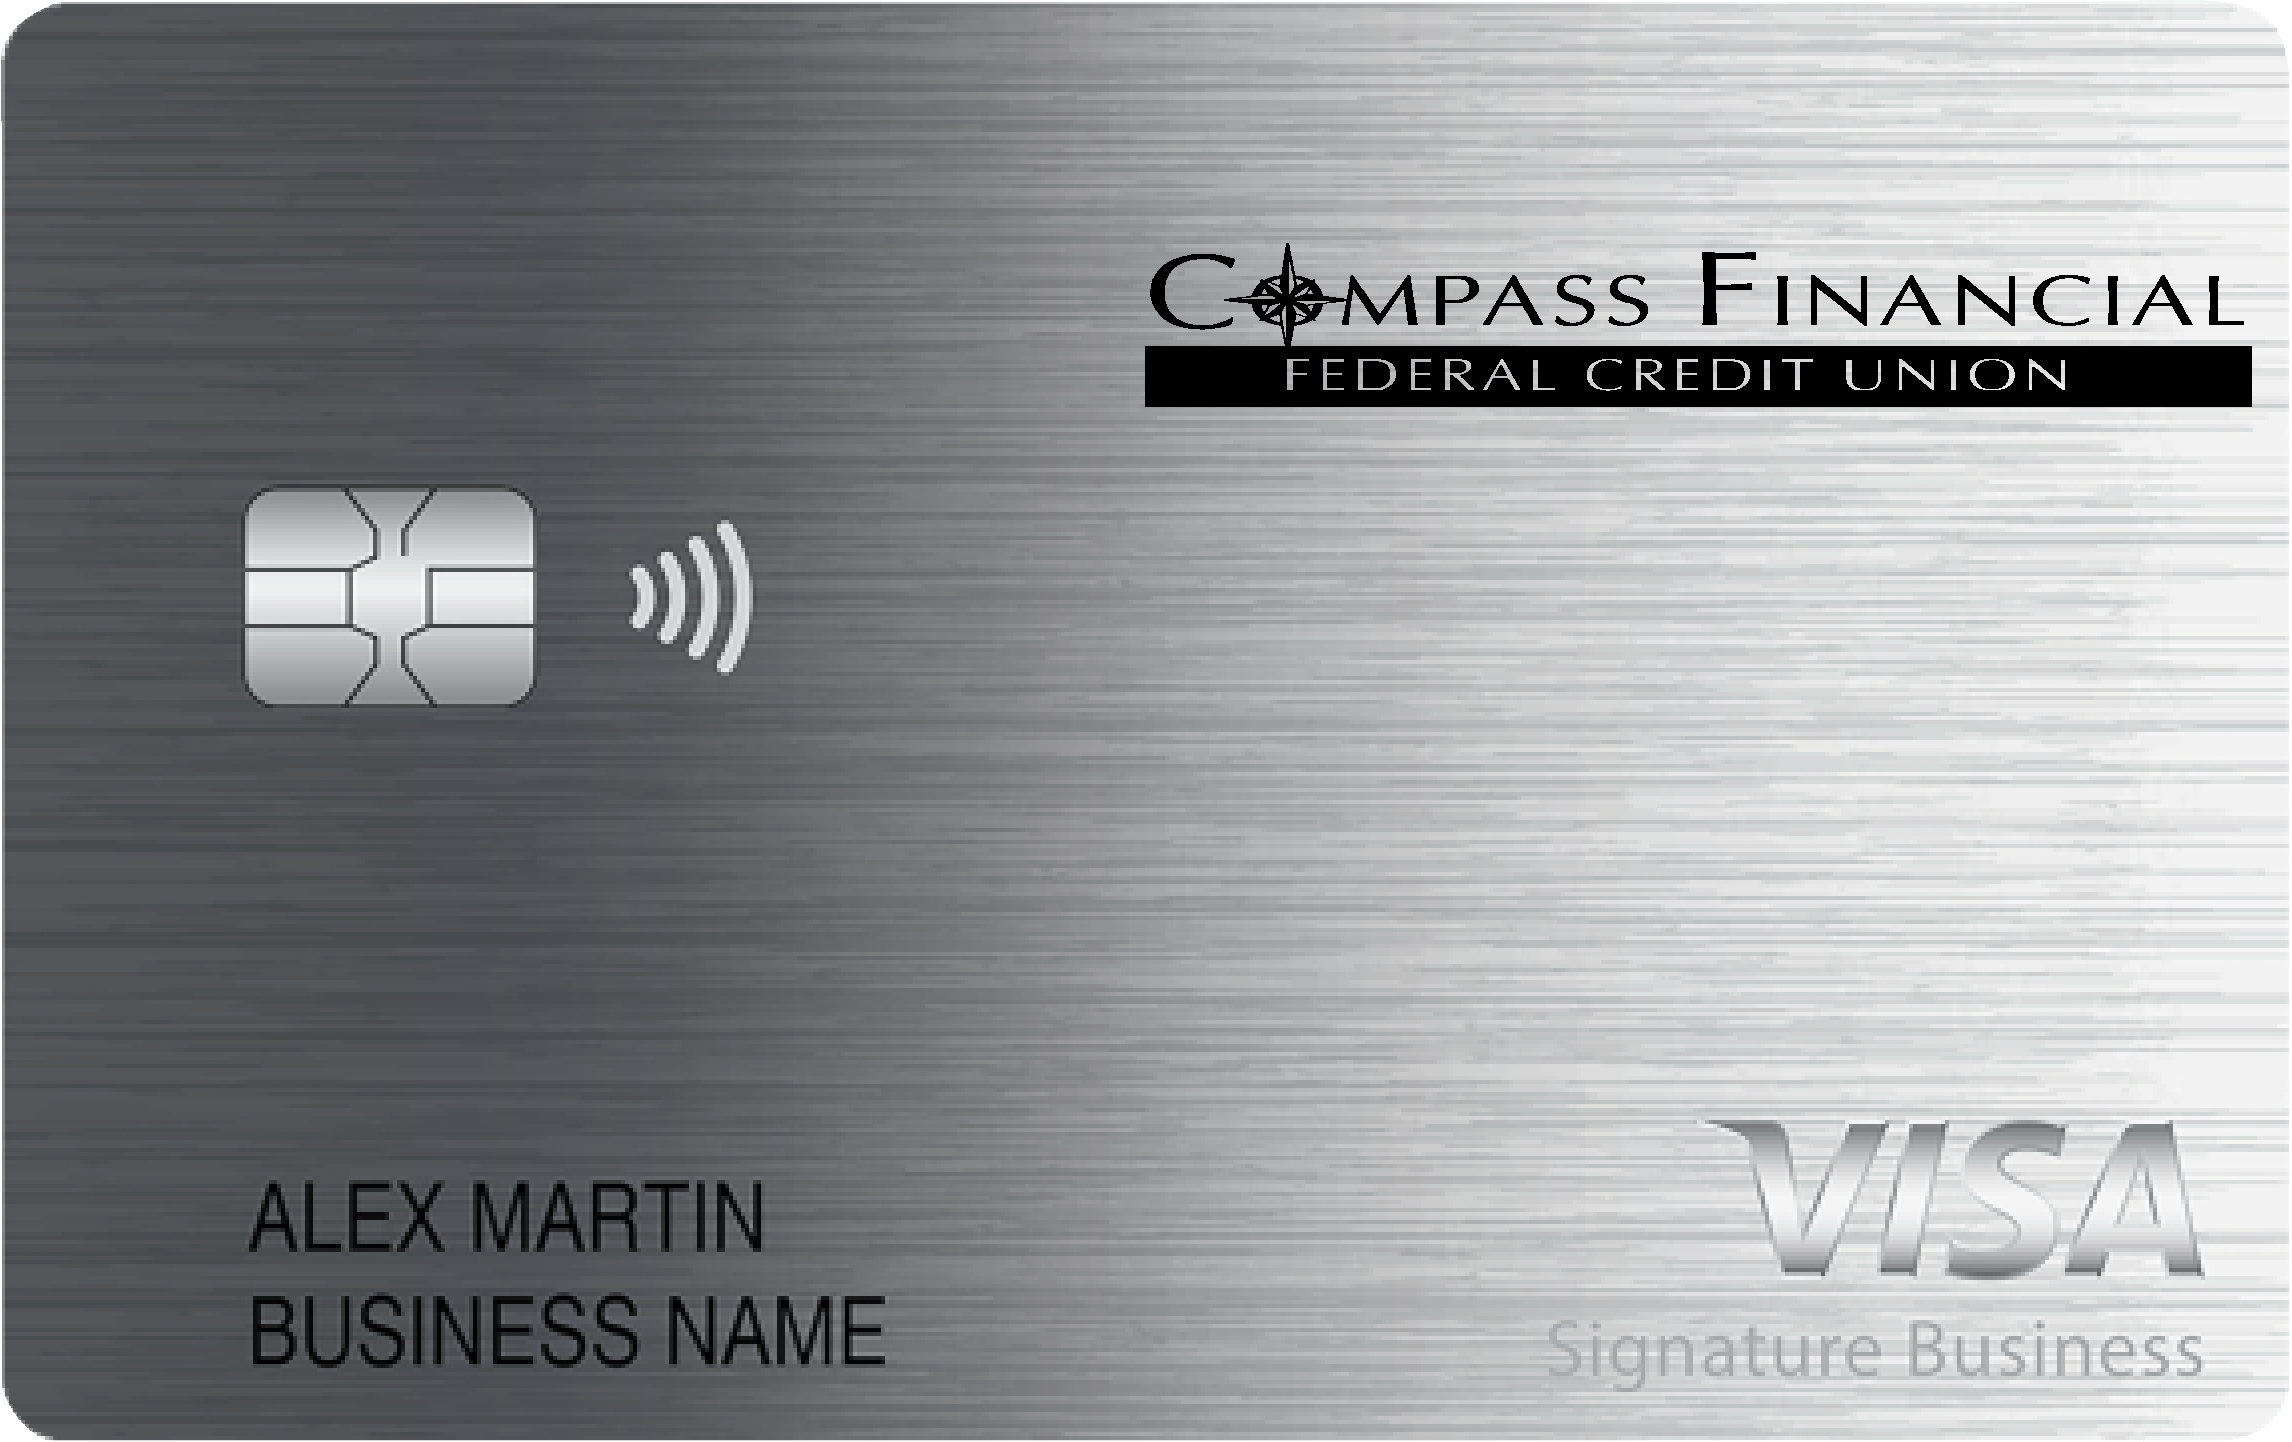 Compass Financial Federal Credit Union Smart Business Rewards Card